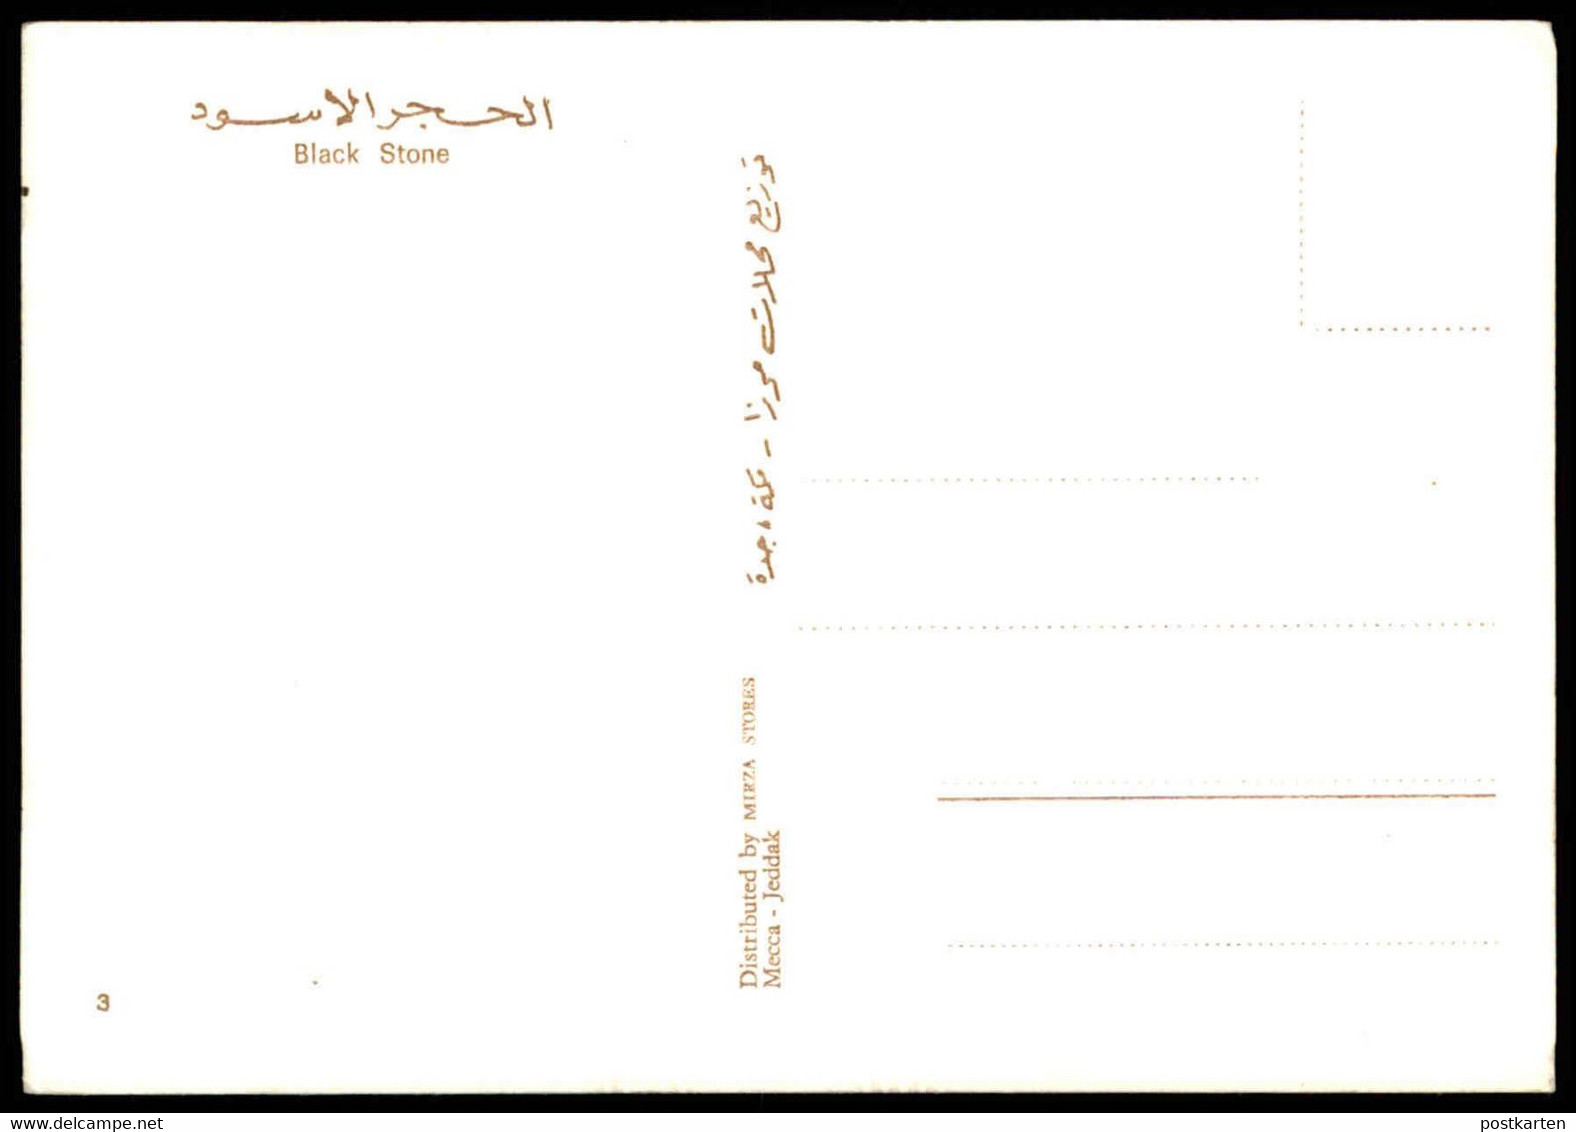 ÄLTERE KARTE MECCA HADDSCH BLACK STONE KAABA Mekka Saudi Arabien Saudi Arabia Pilger Cpa Ansichtskarte Postcard AK - Saoedi-Arabië